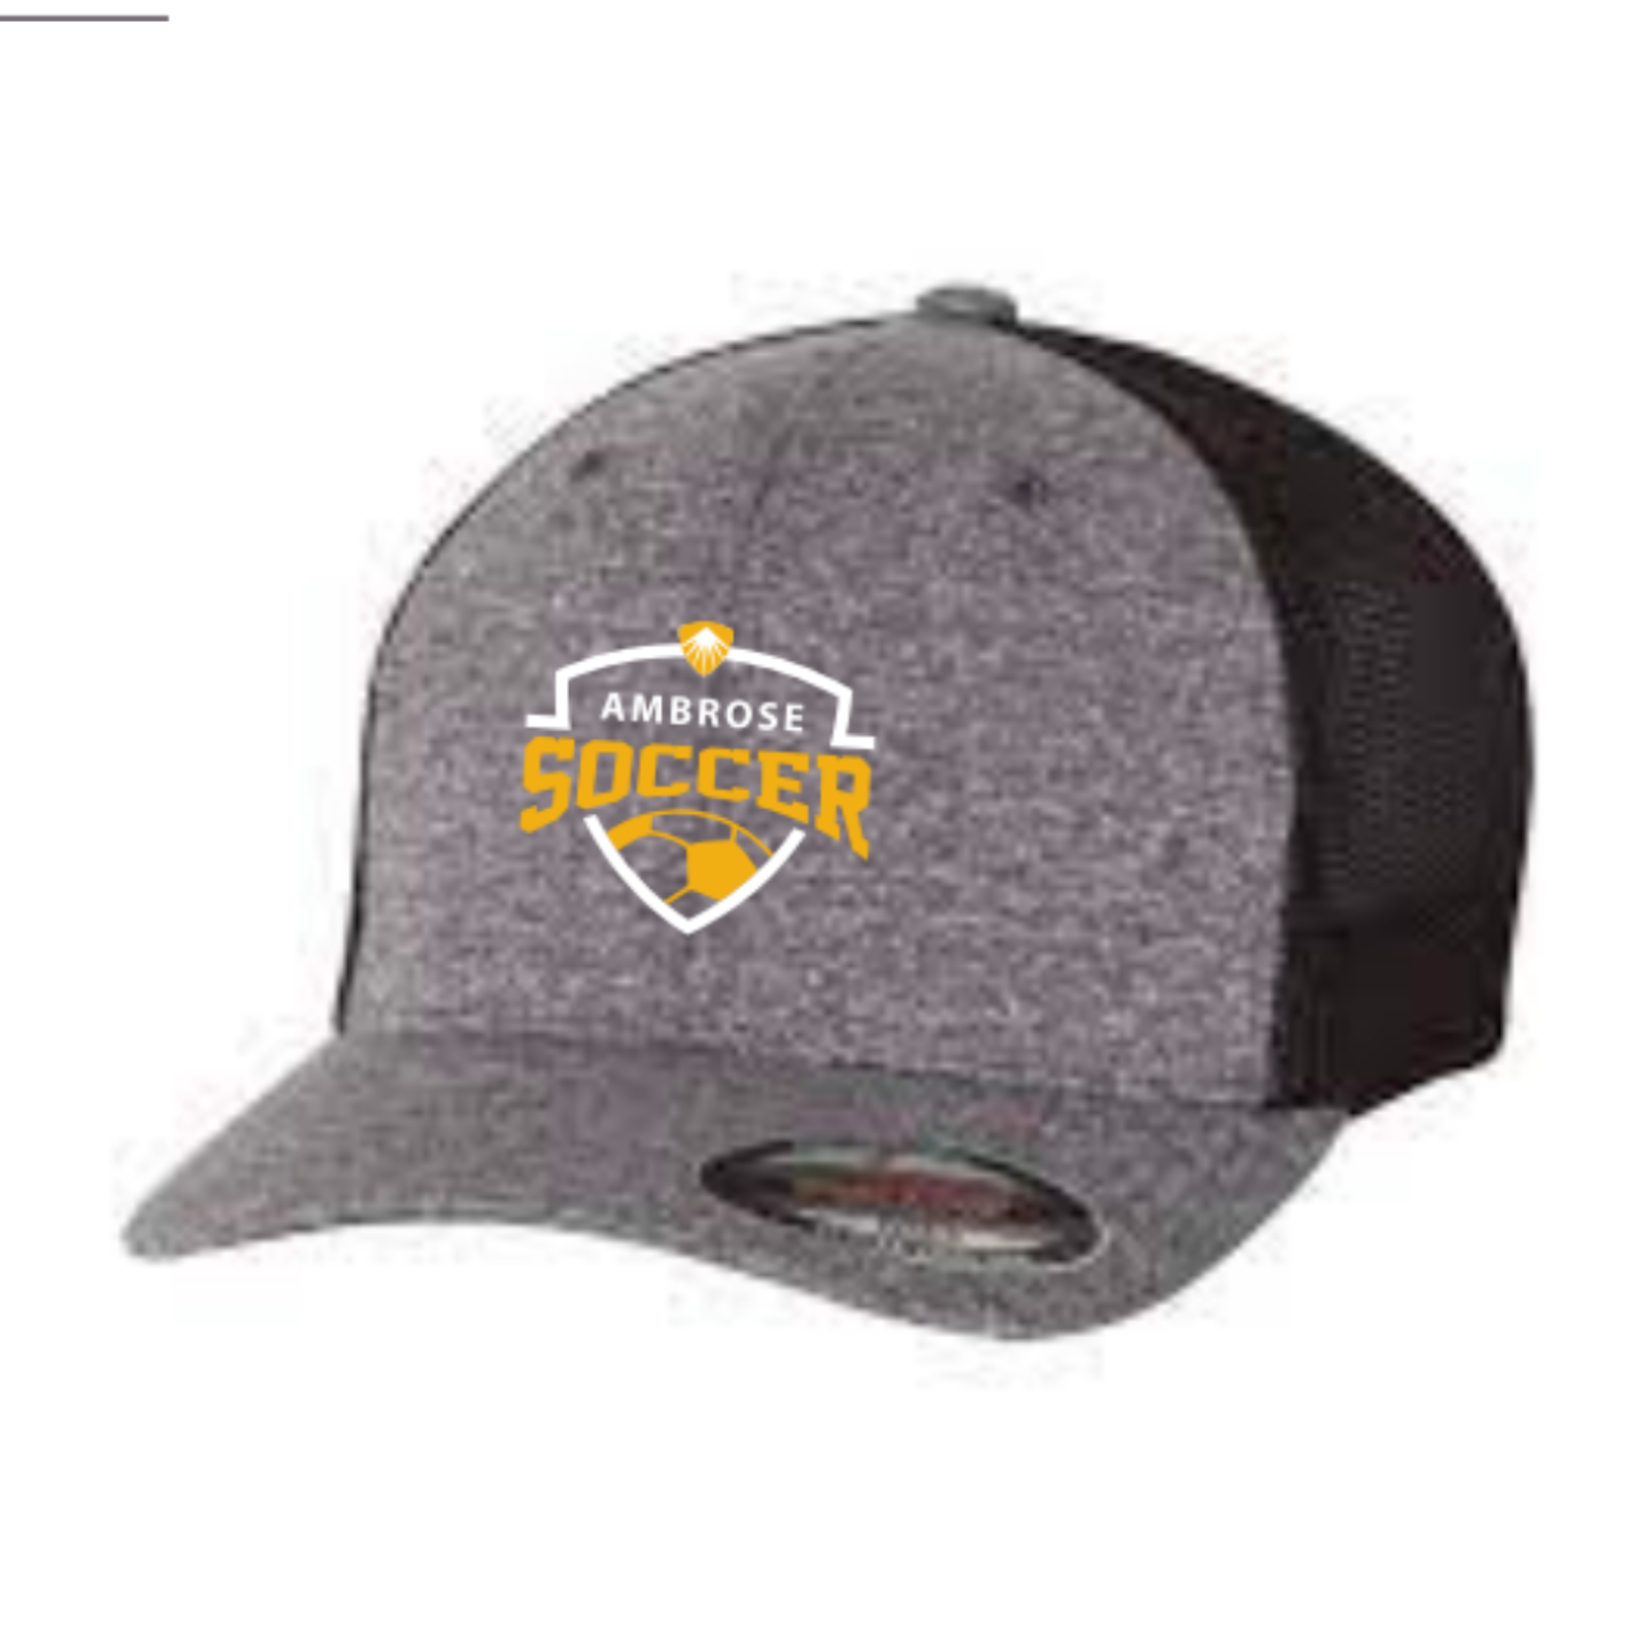 Herringbone Trucker Caps - Sport specific